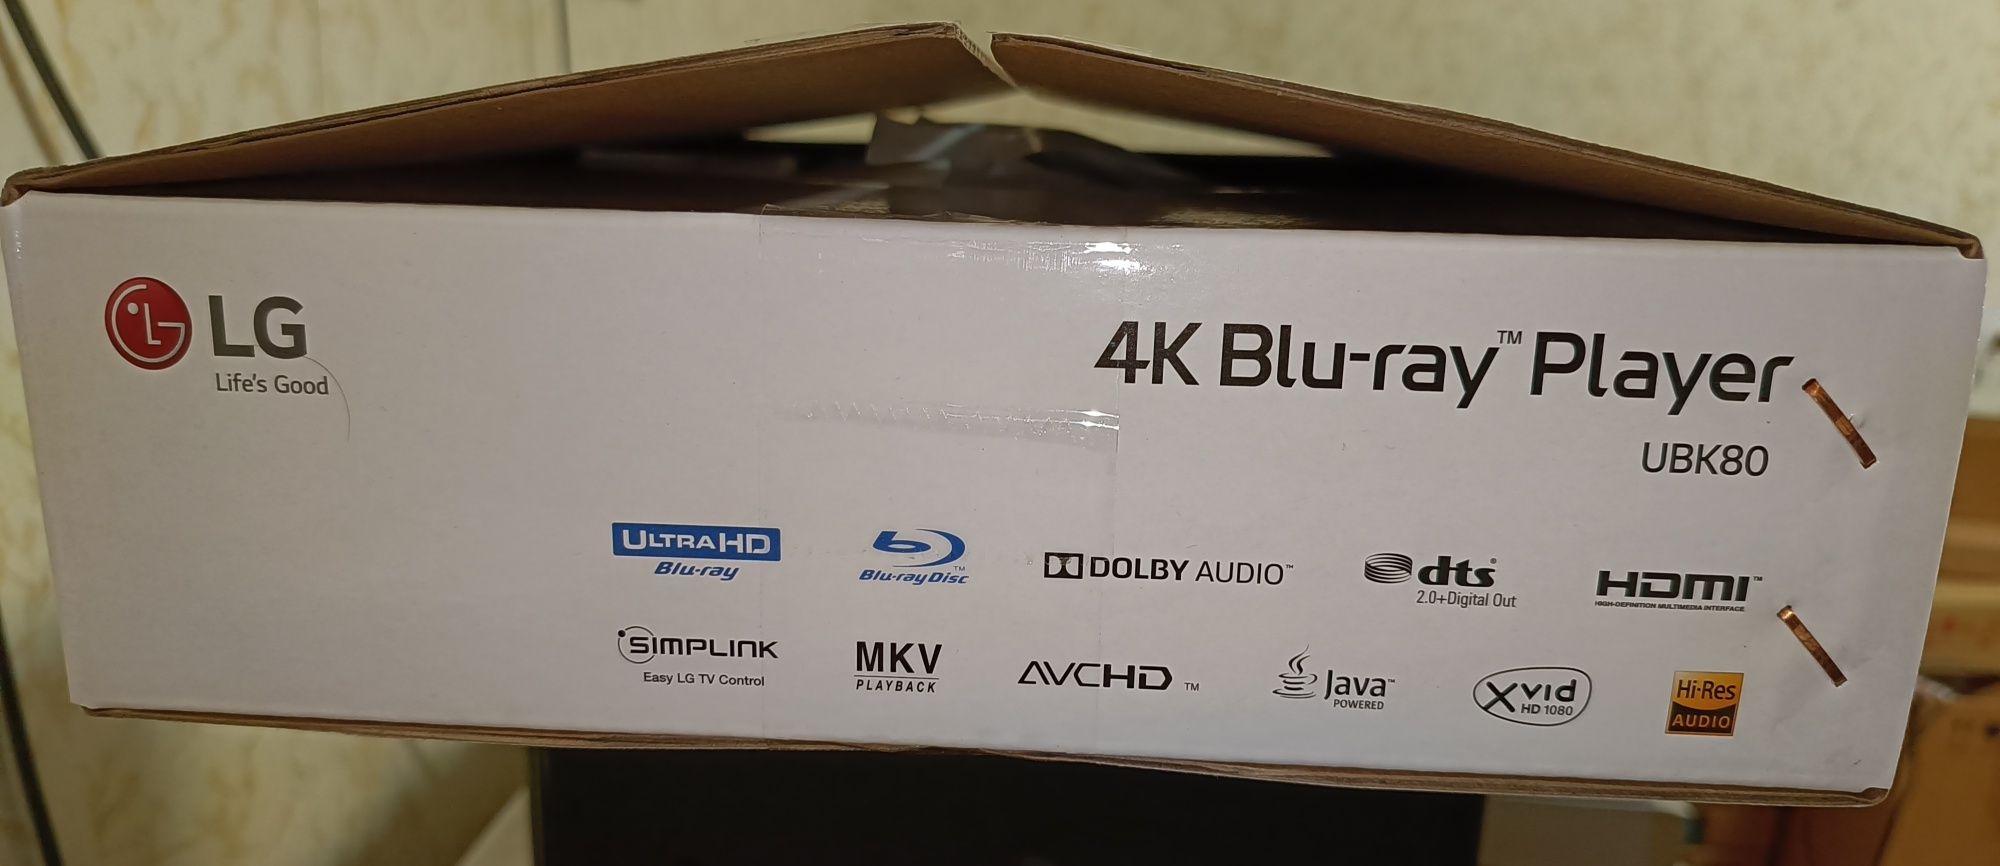 LG UBK80 4K Blu-ray player Скидки на диски!